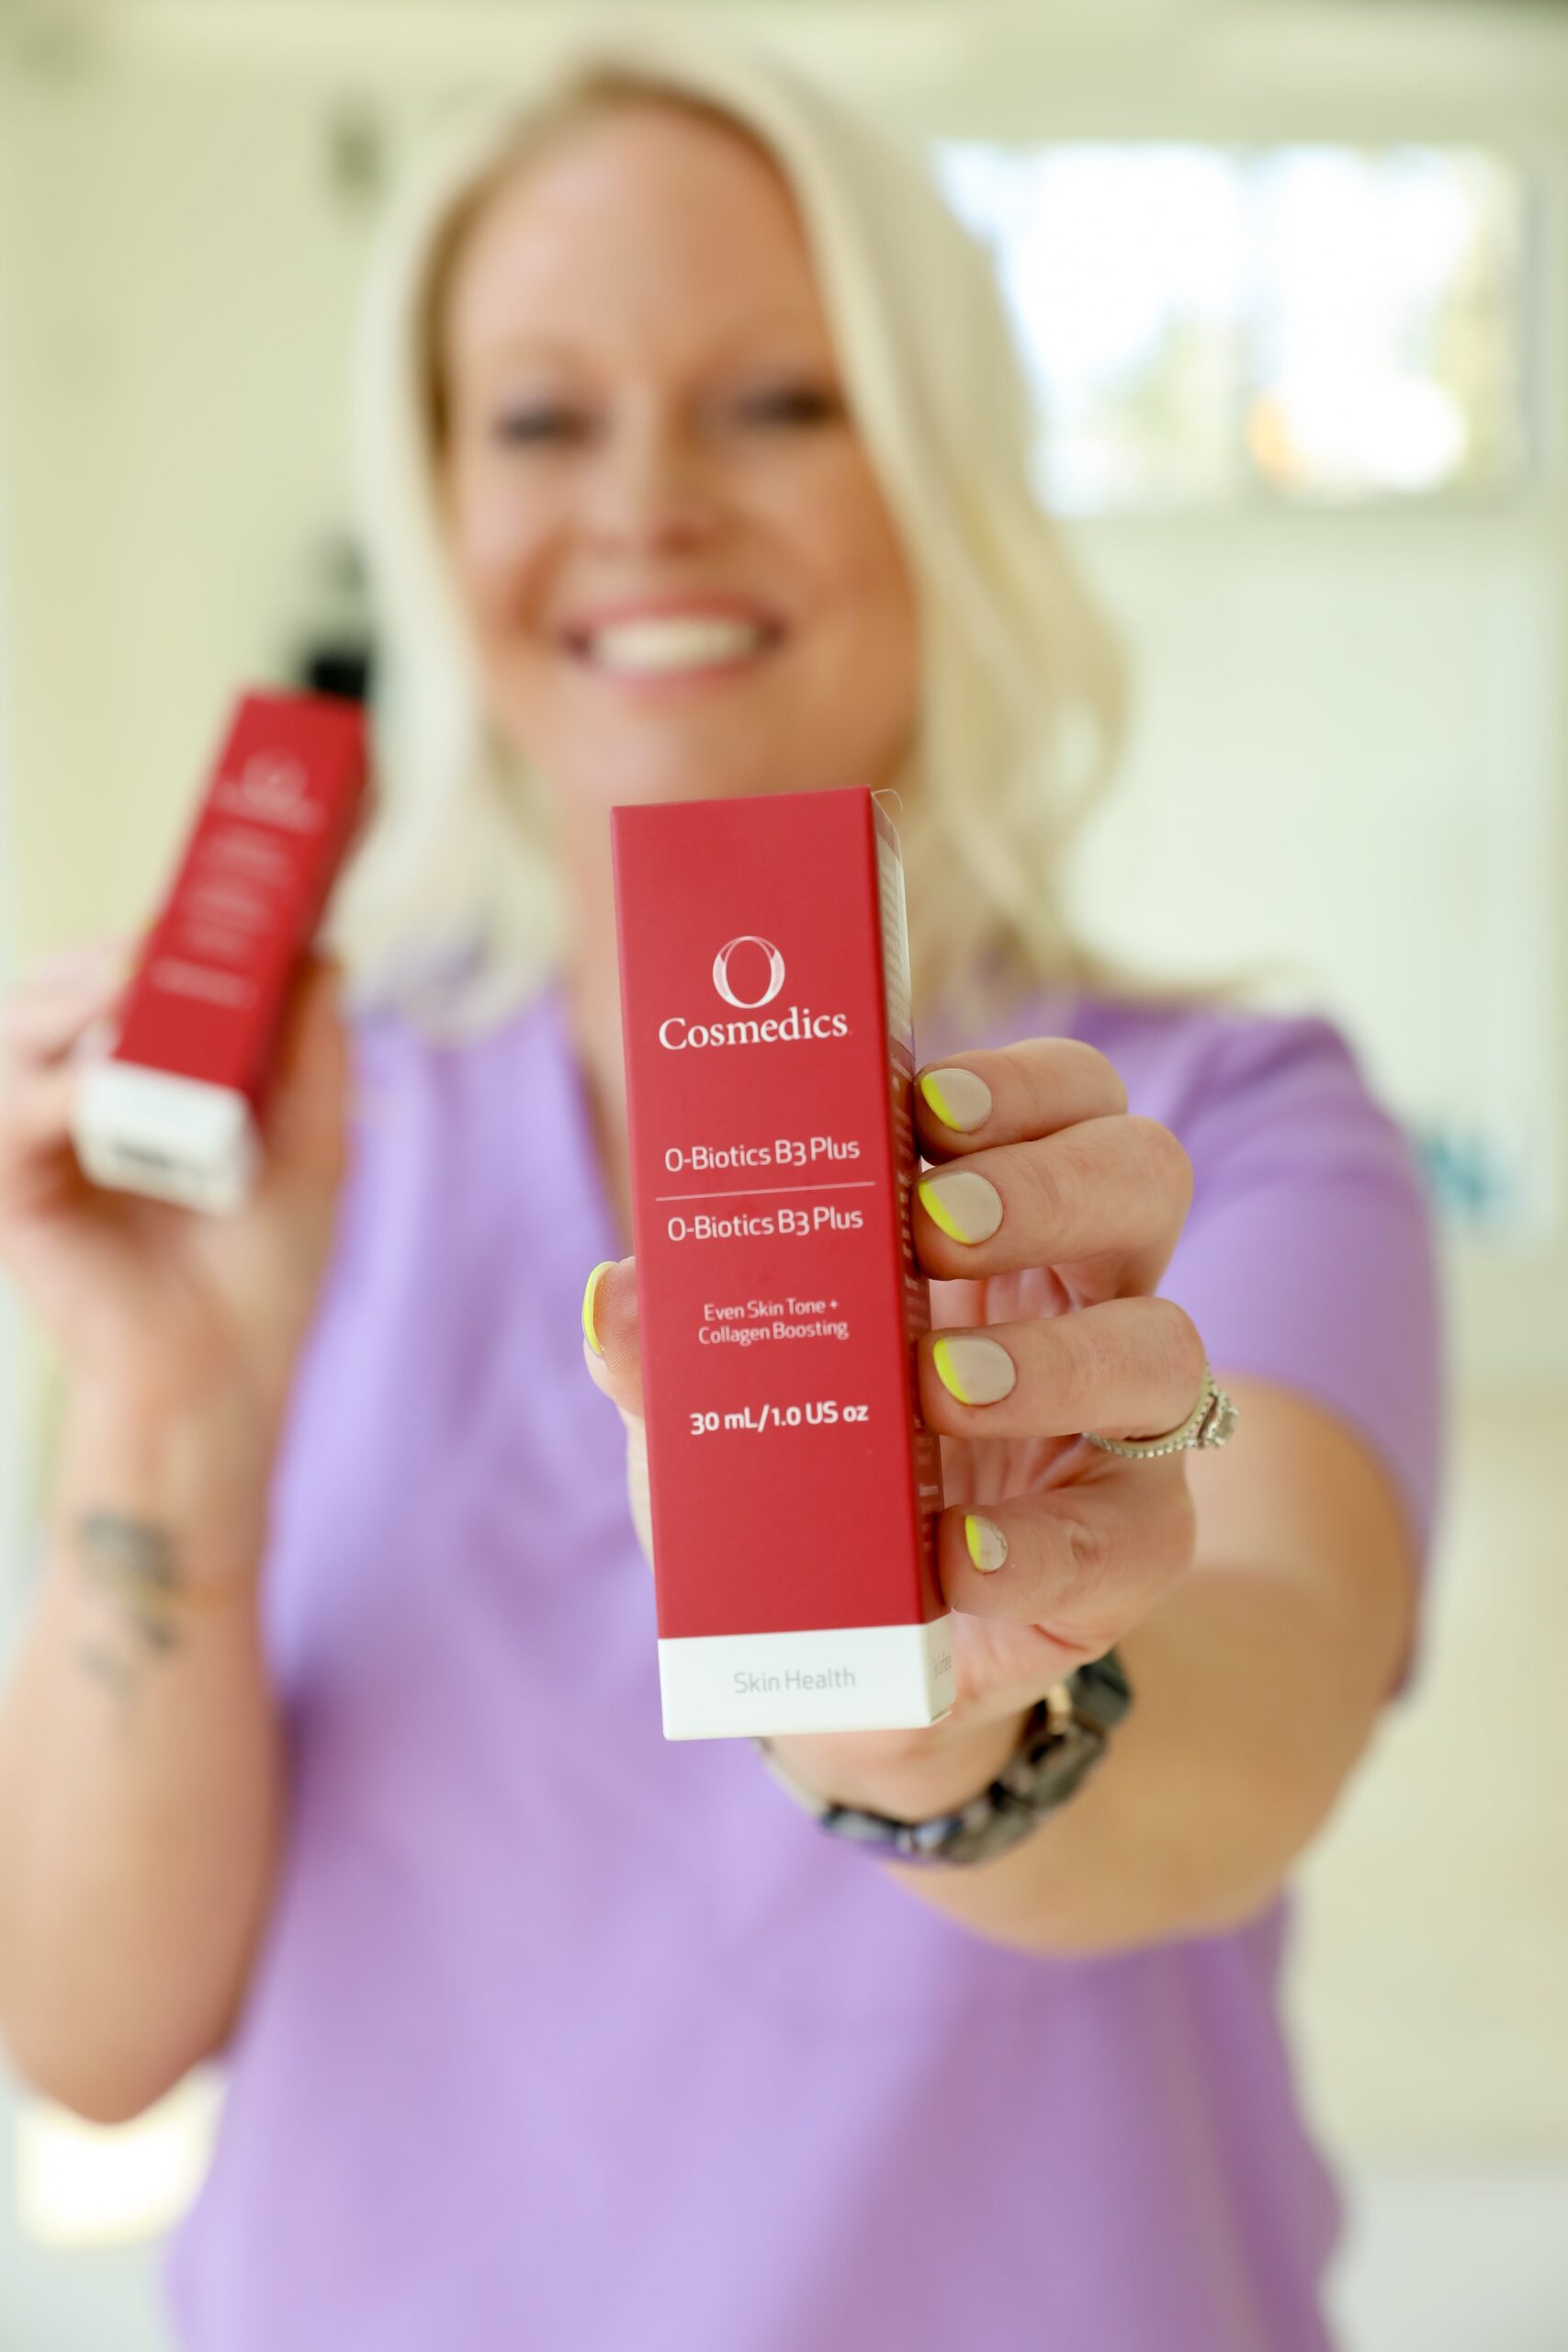 Photo of O Cosmedics products